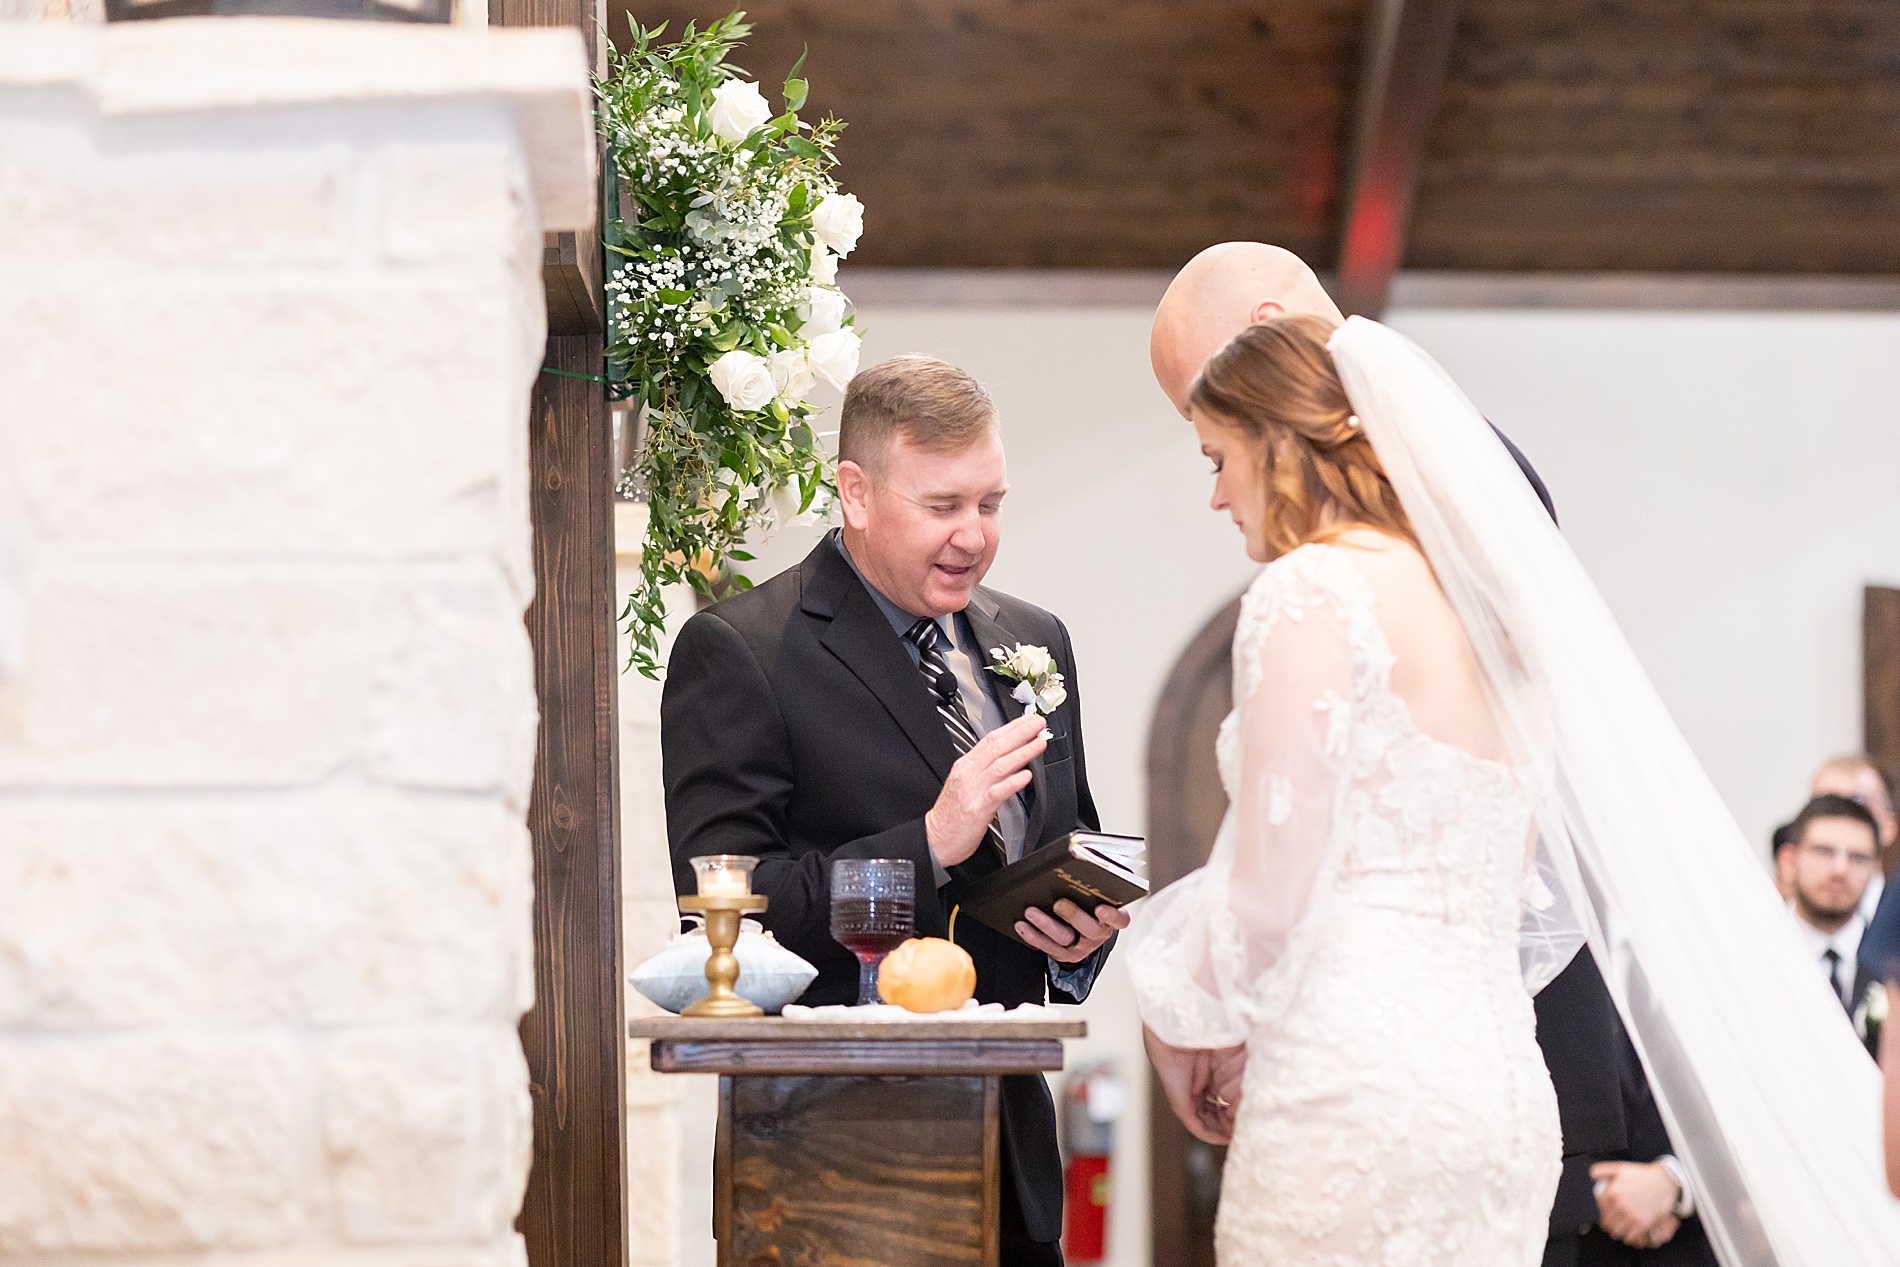 communion at wedding ceremony 